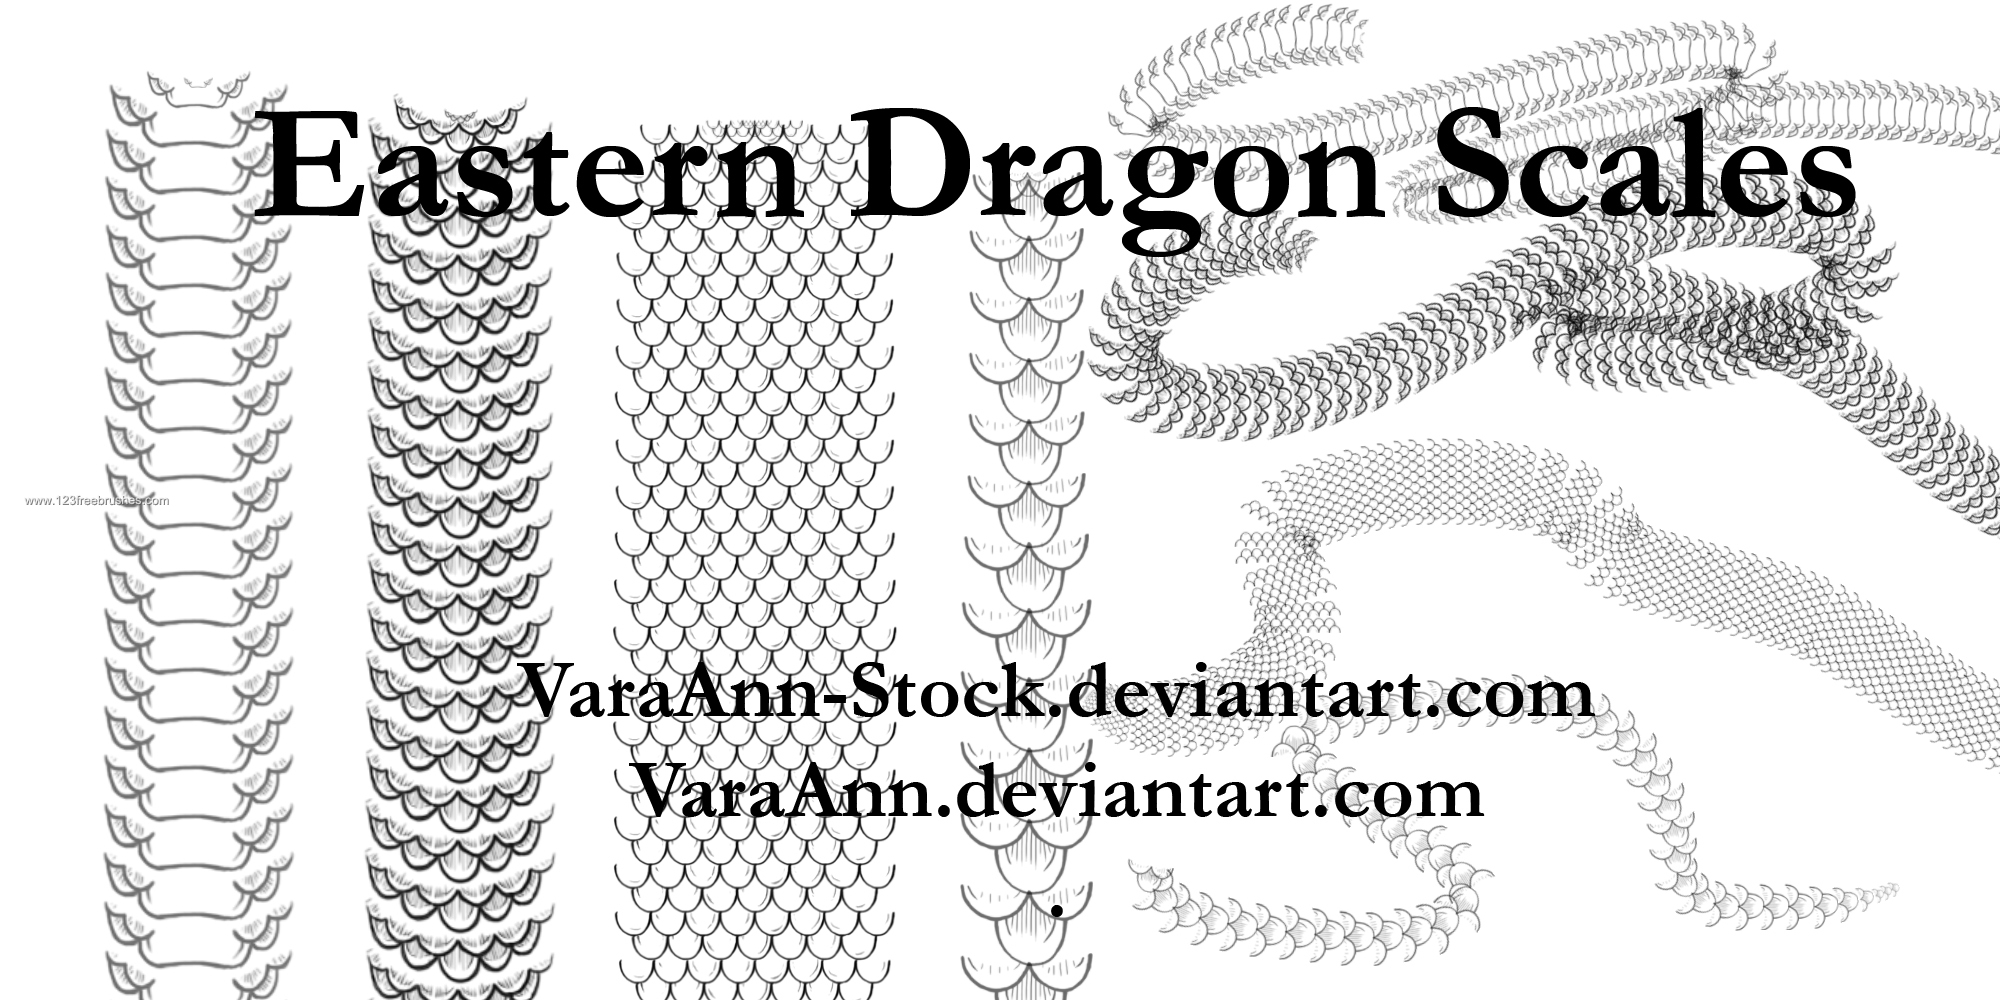 Eastern Dragon Scales